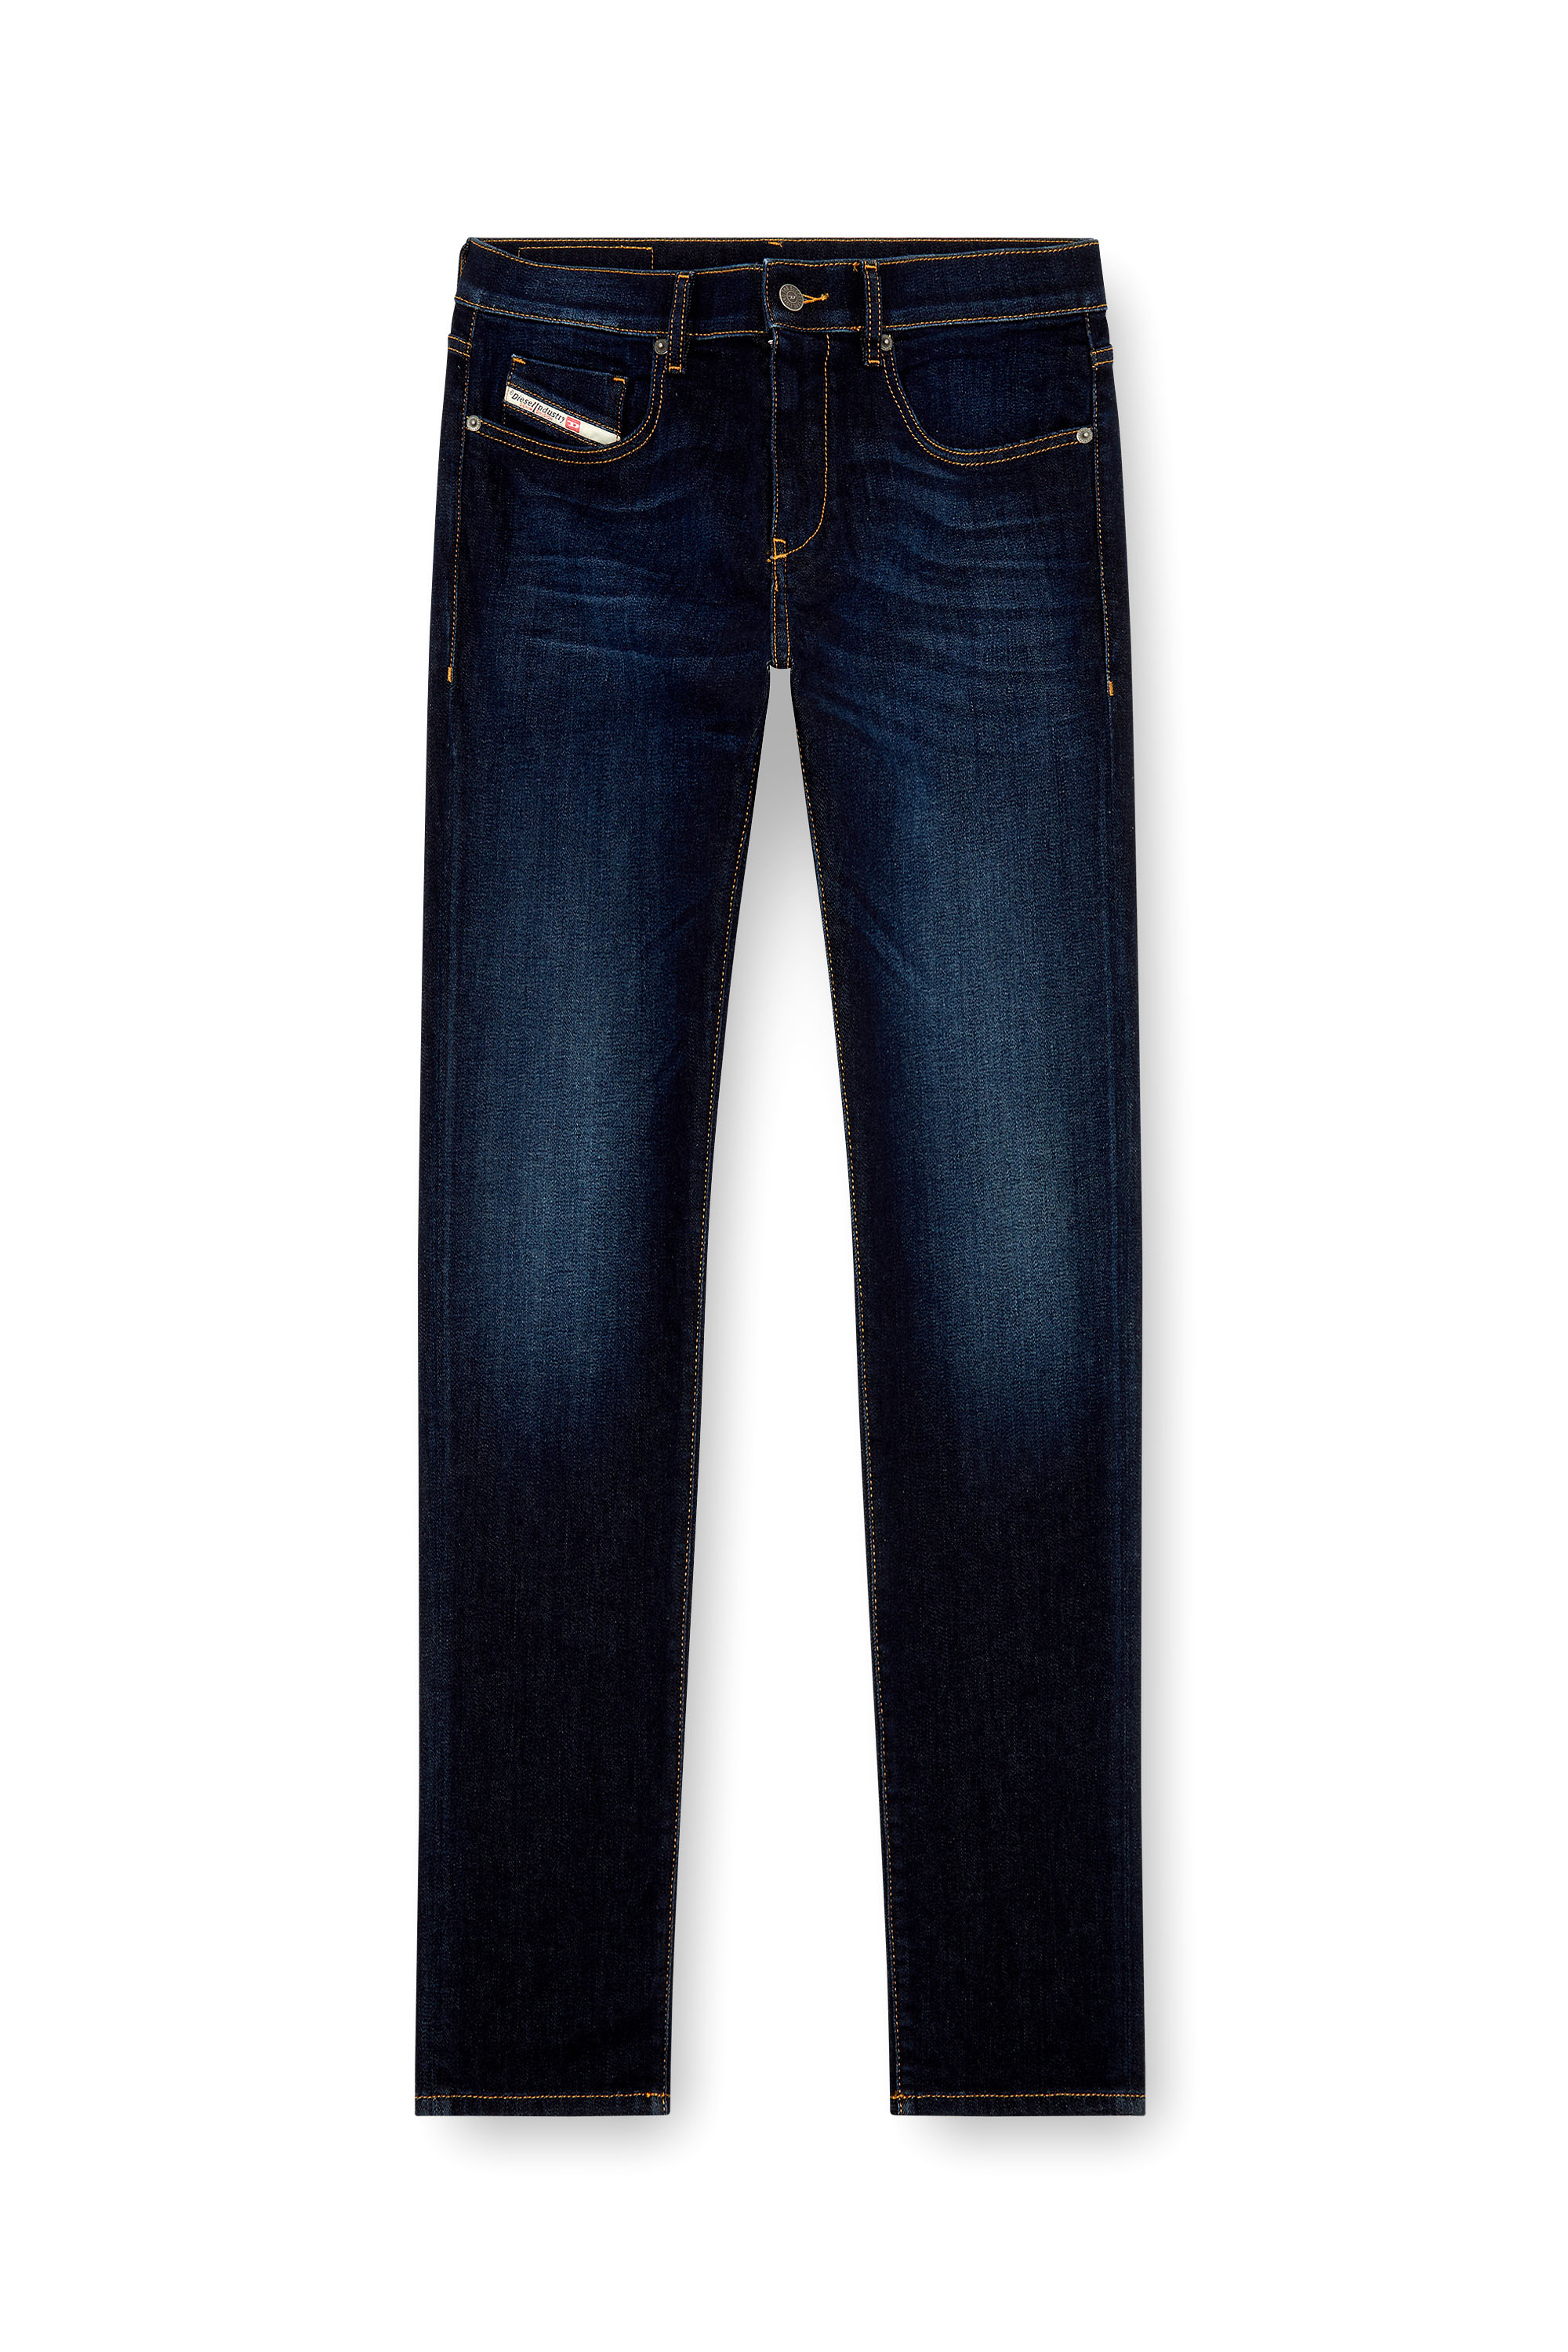 Diesel - Slim Jeans 2019 D-Strukt 009ZS, Hombre Slim Jeans - 2019 D-Strukt in Azul marino - Image 3